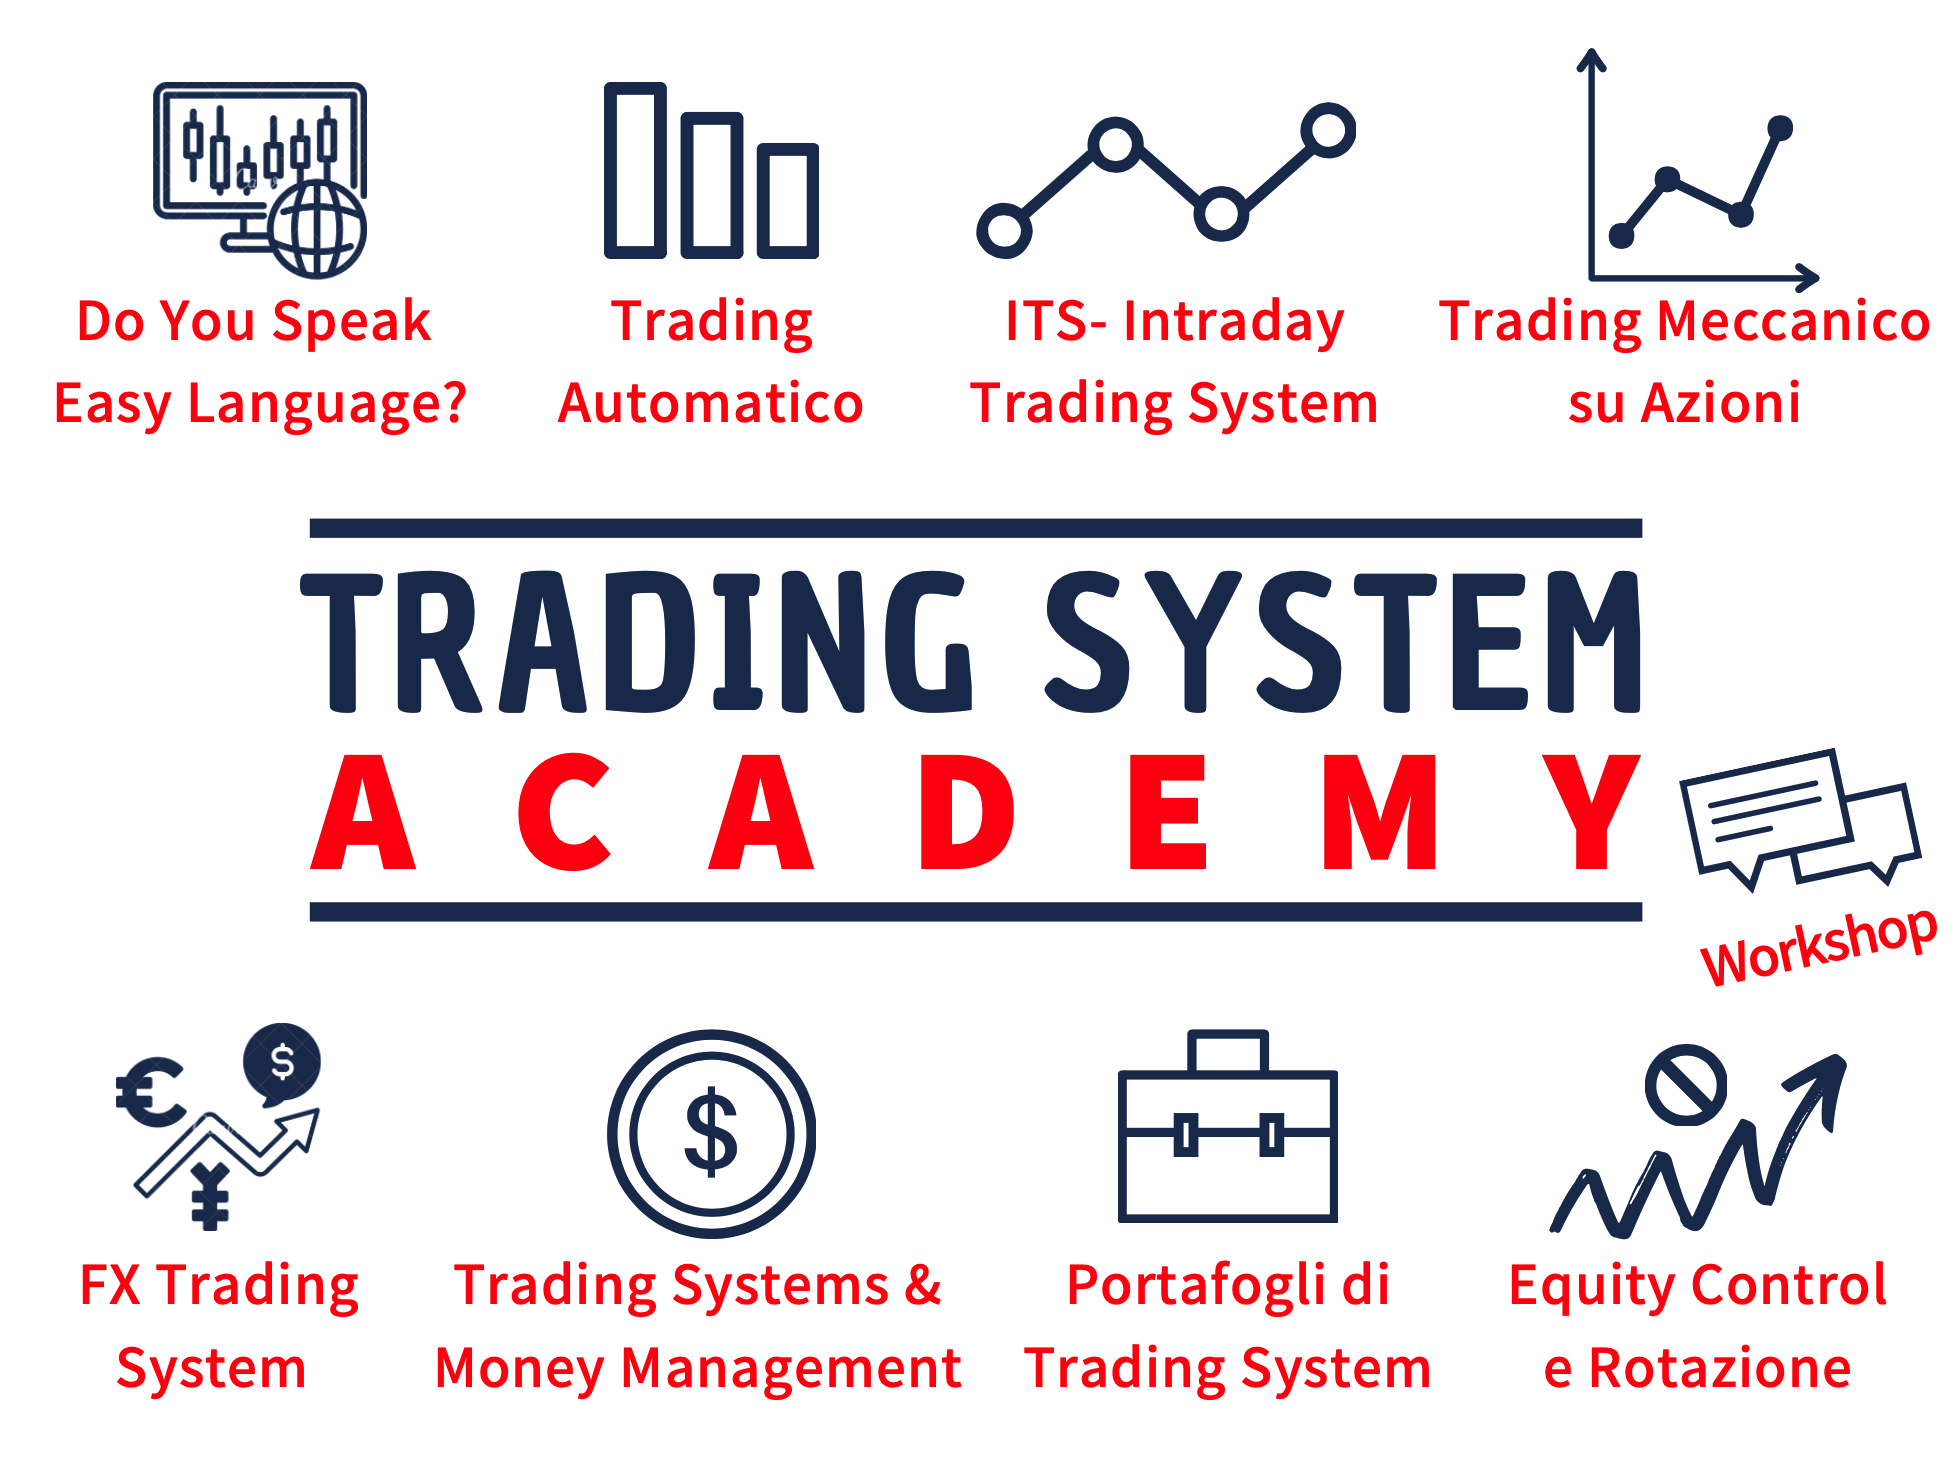 accademia trading, corso trading milano, trading system academy, trading academy